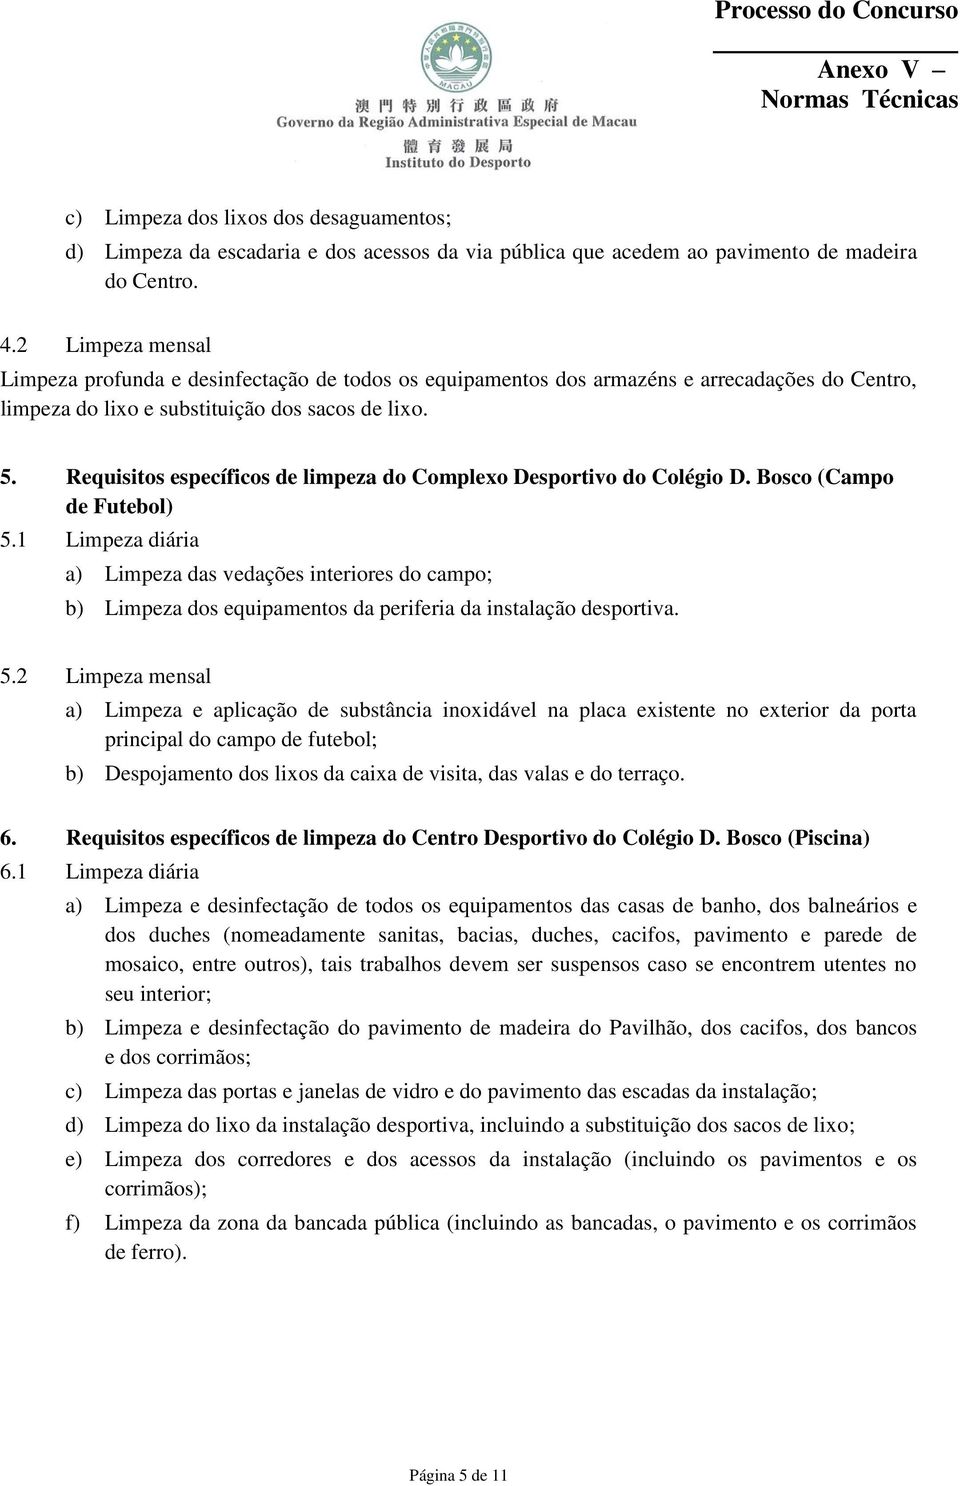 Requisitos específicos de limpeza do Complexo Desportivo do Colégio D. Bosco (Campo de Futebol) 5.